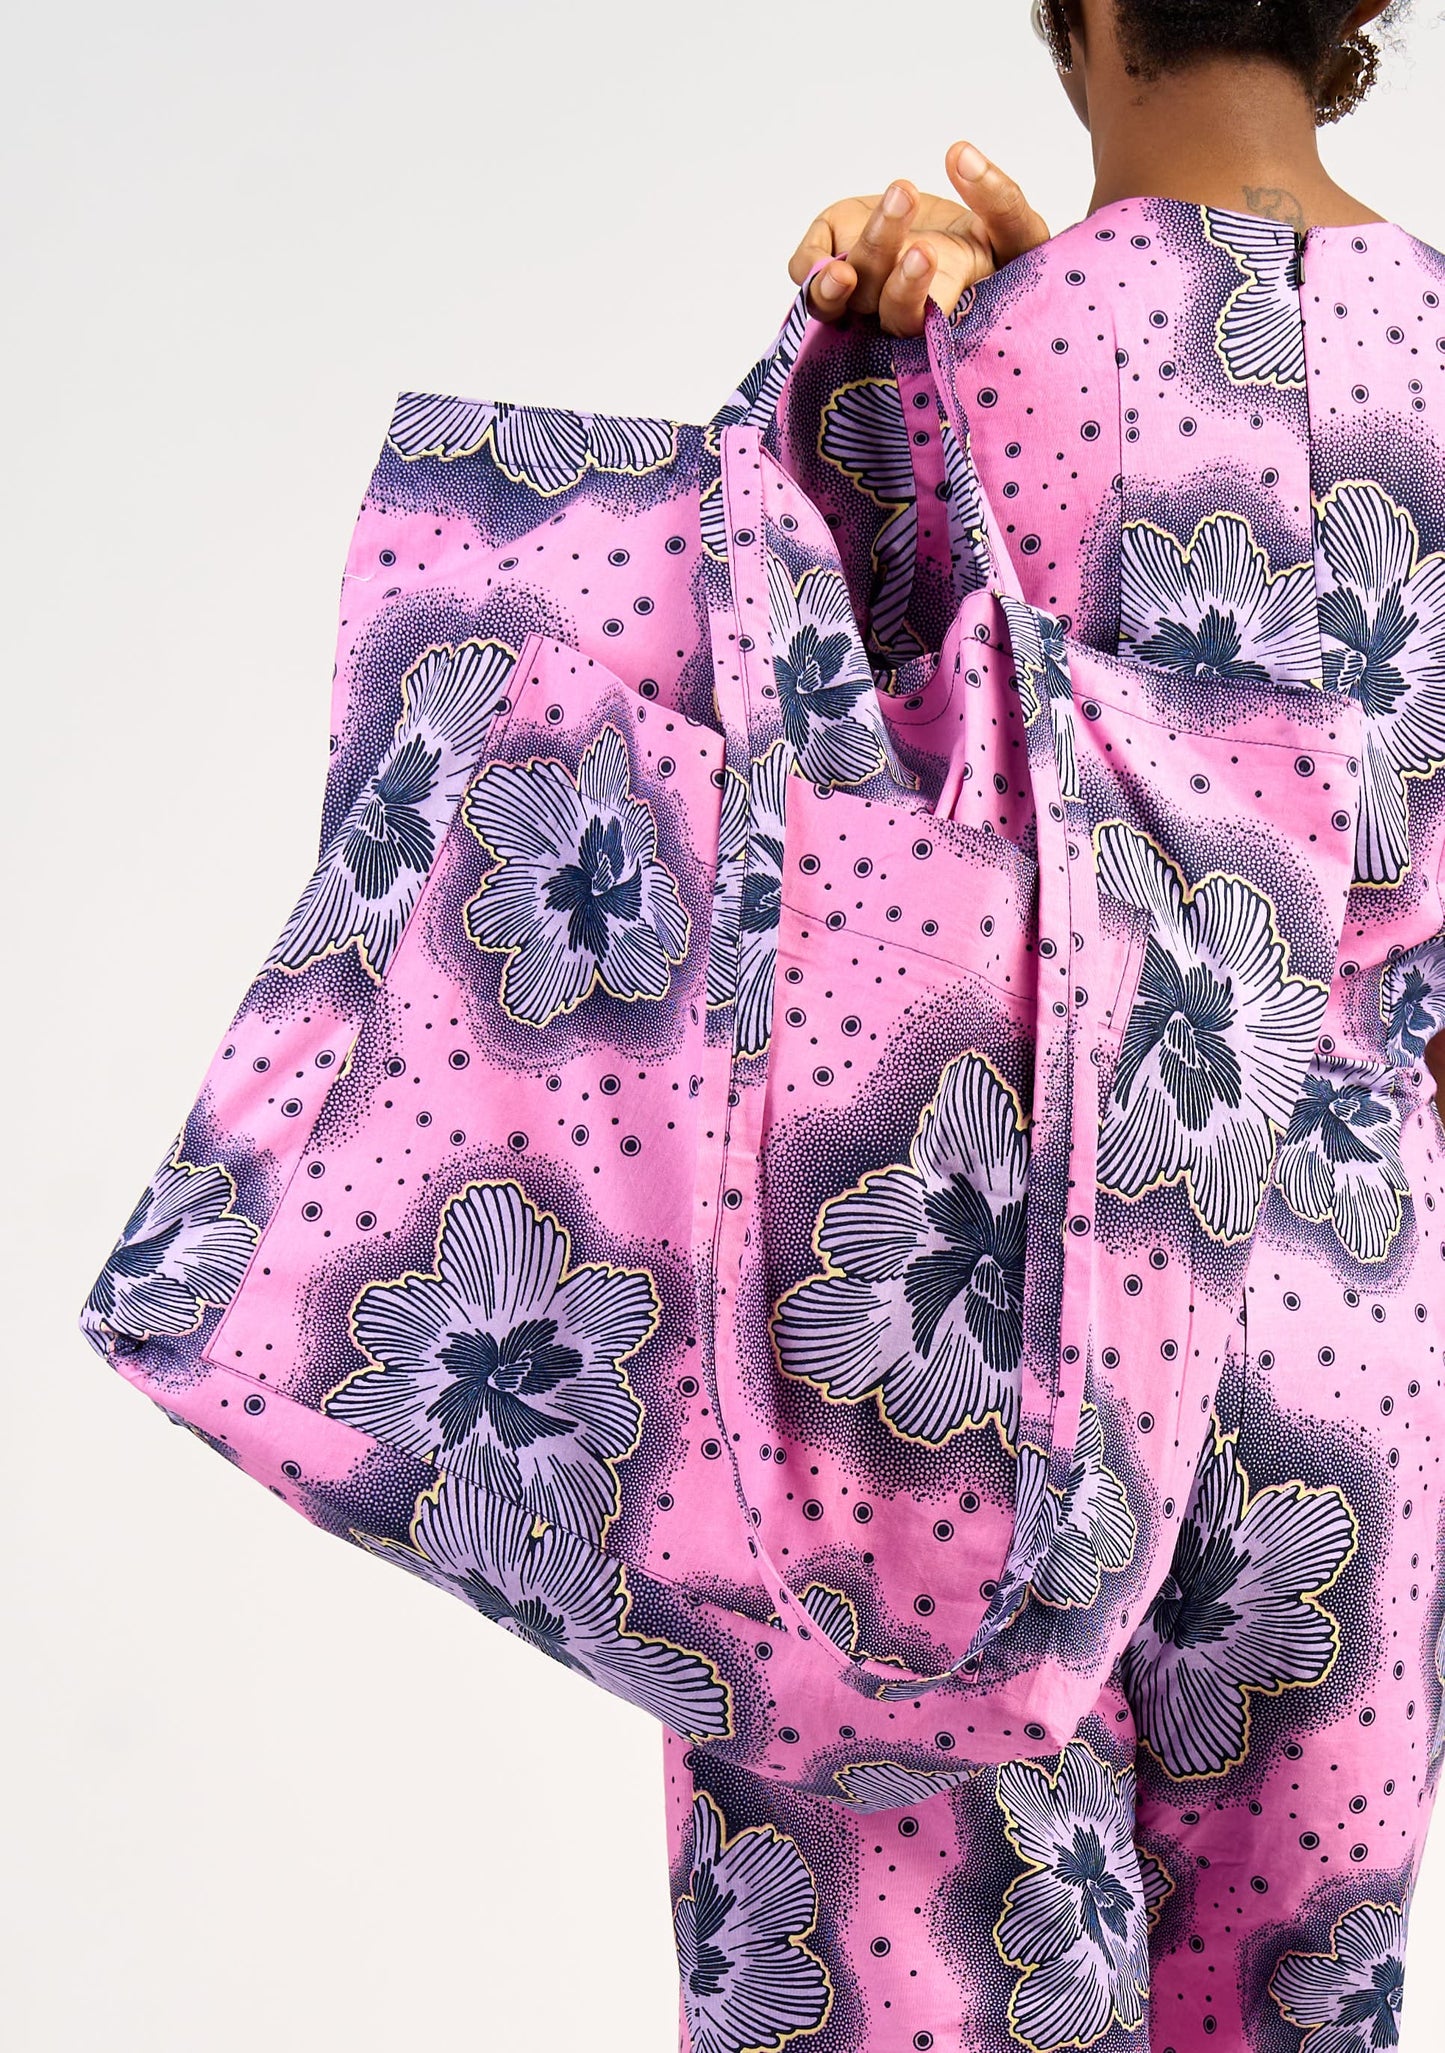 YEVU Accessories - Bag Double Strap Bag - Purple Flowers